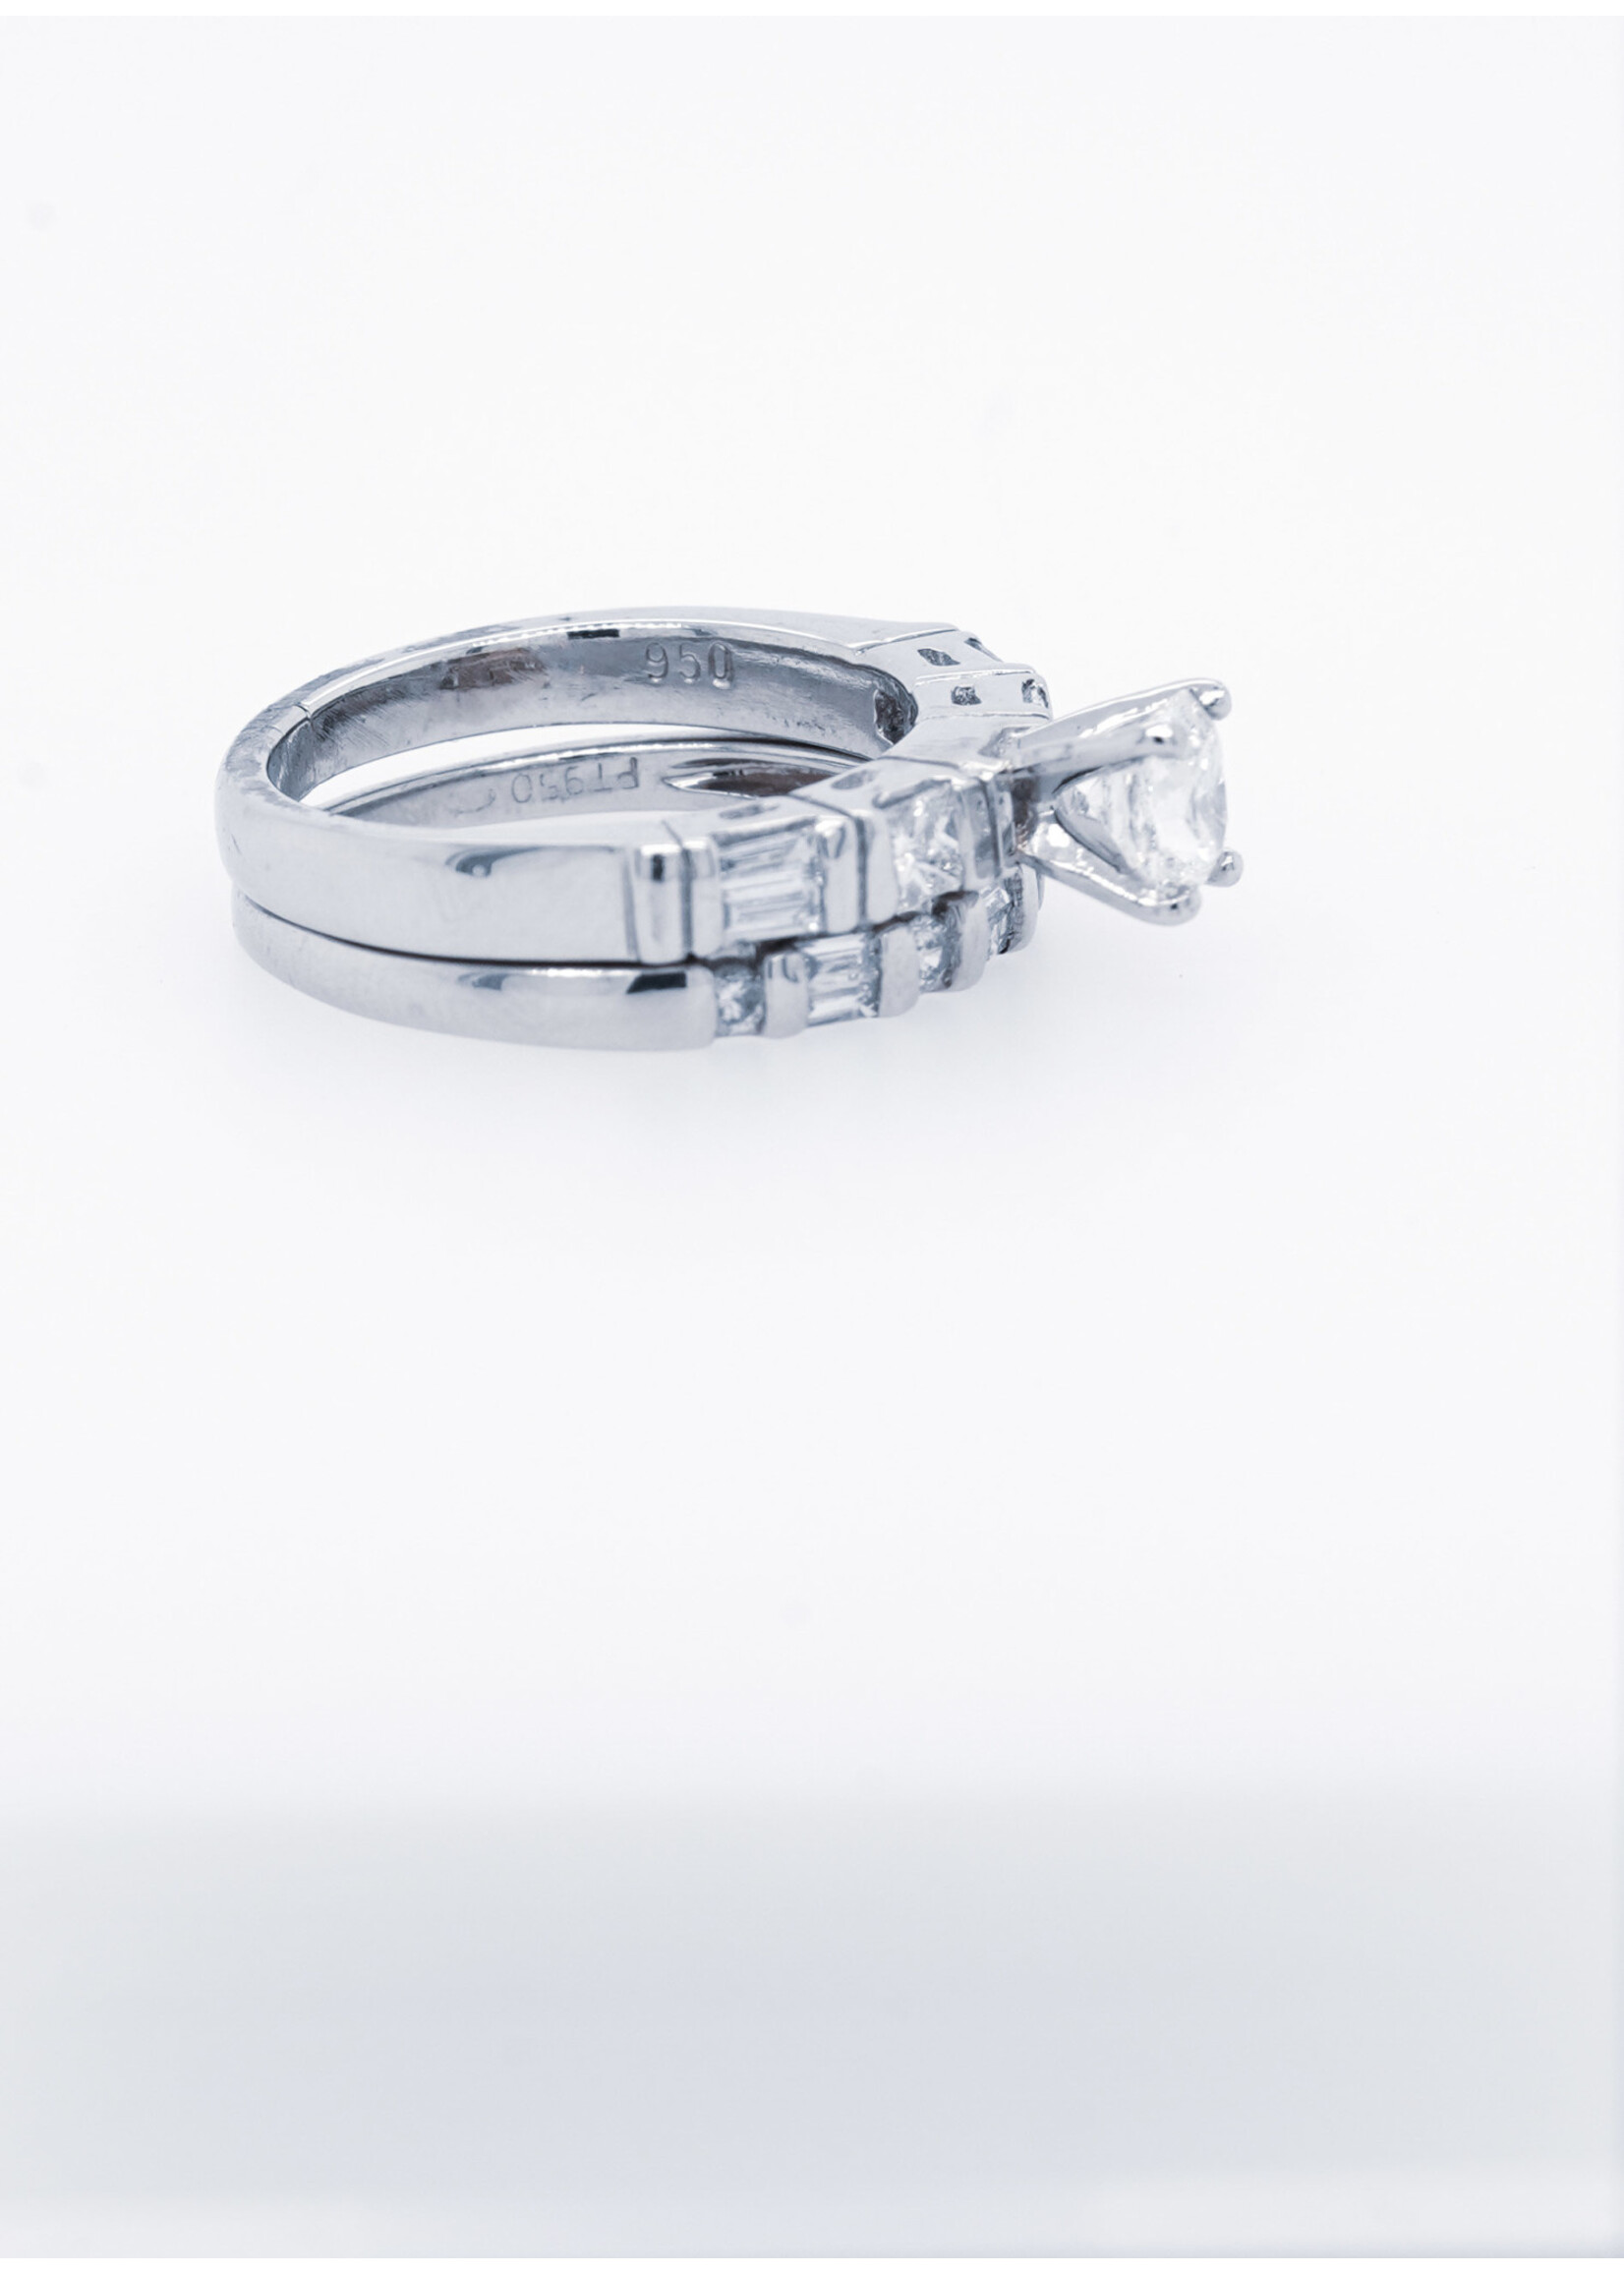 Platinum 10.13g 1.43ctw (.54ctr) G/SI2 Radiant Diamond Wedding Set (size 5.5)